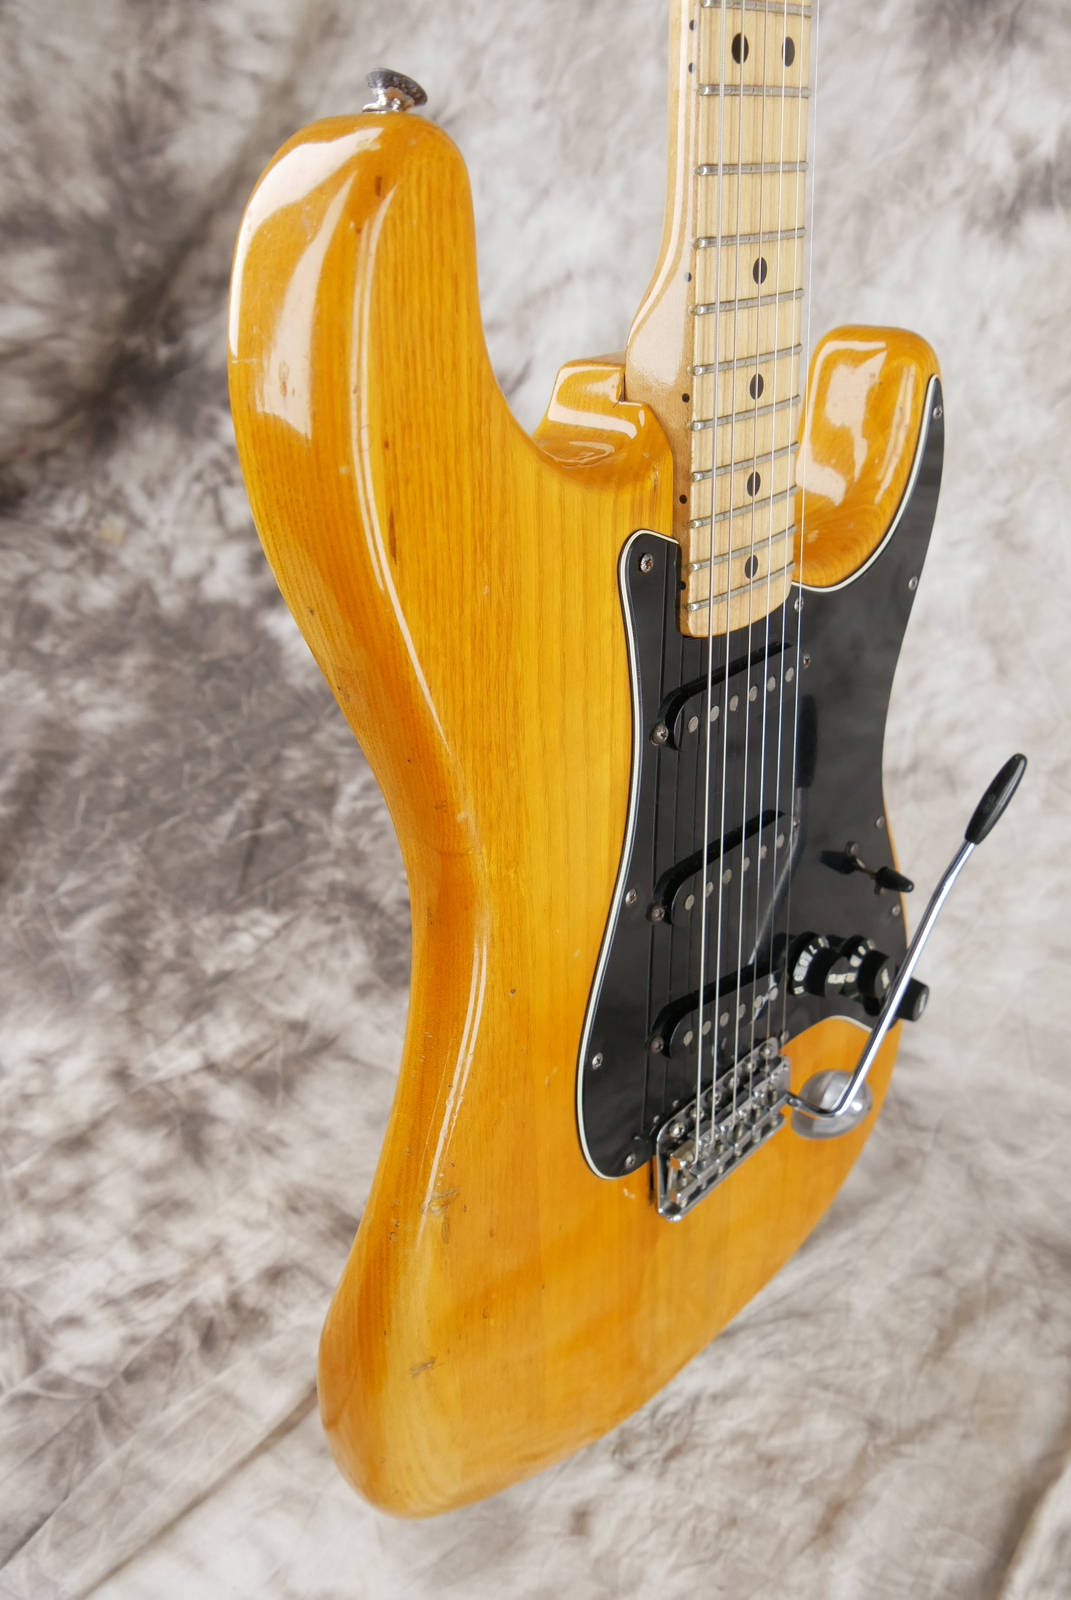 Fender_Stratocaster_10_piece_body_natural_USA_1977-005.JPG